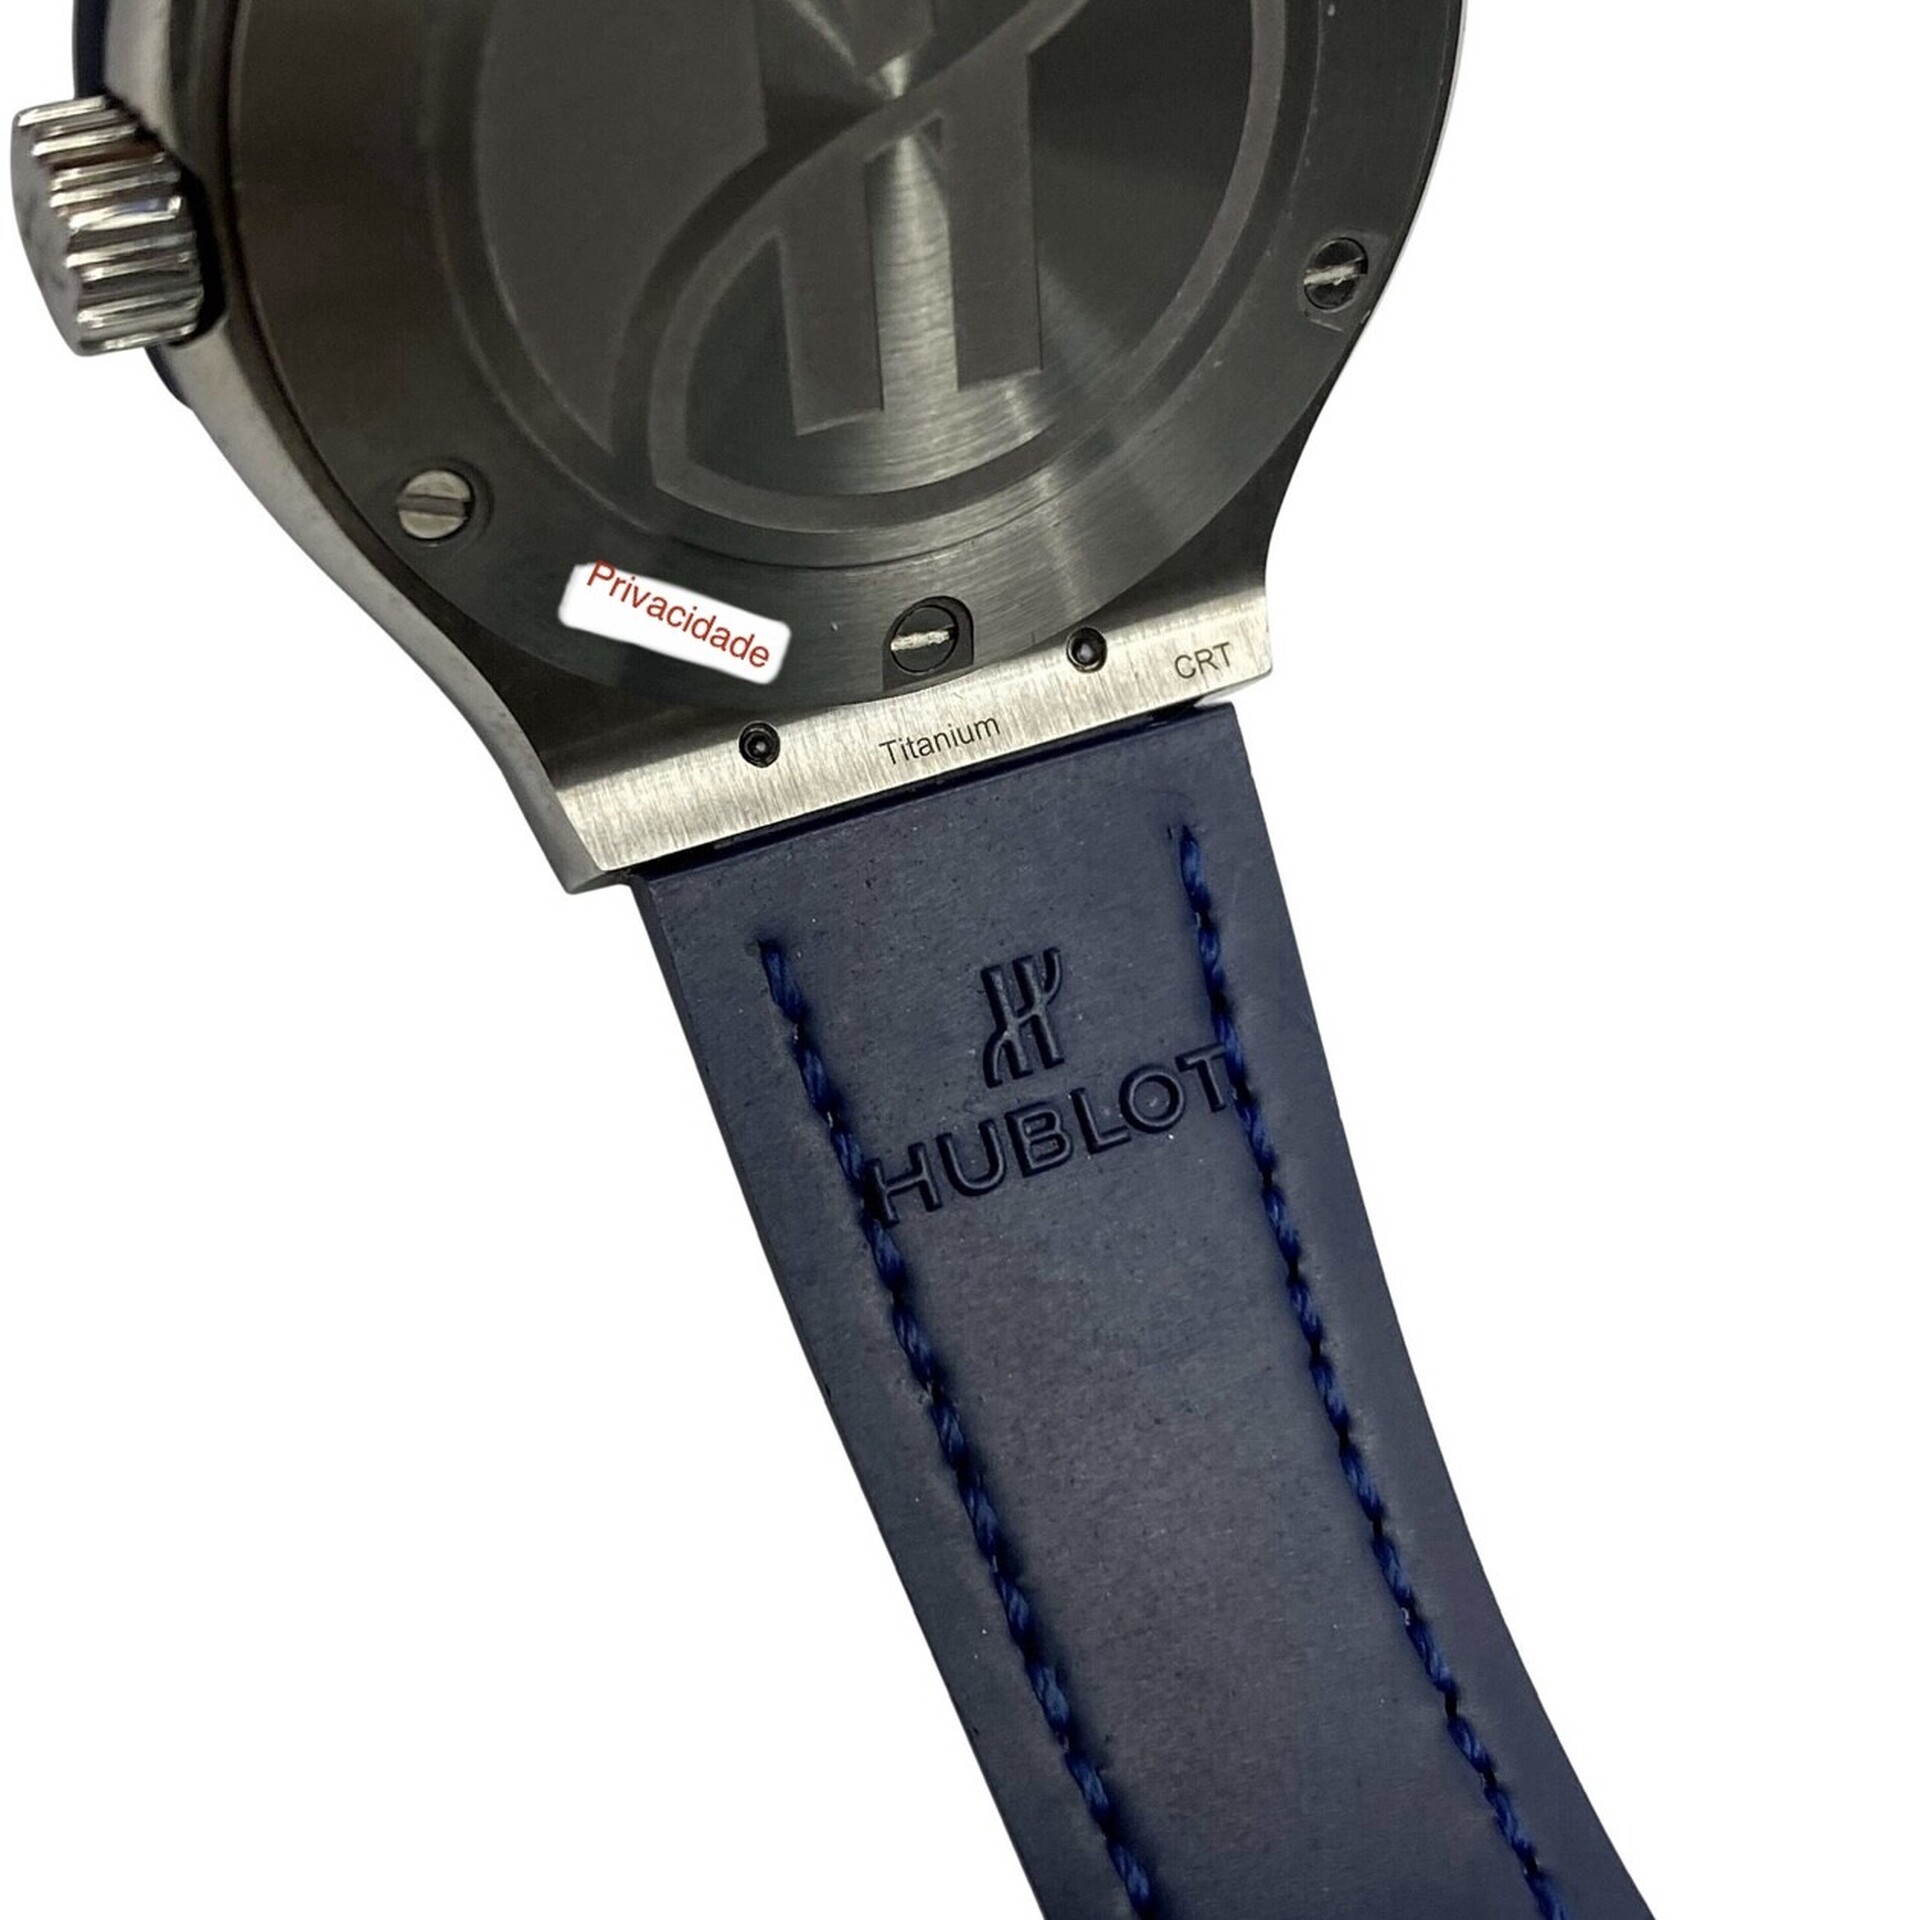 Relógio Hublot Classic Fusion Blue